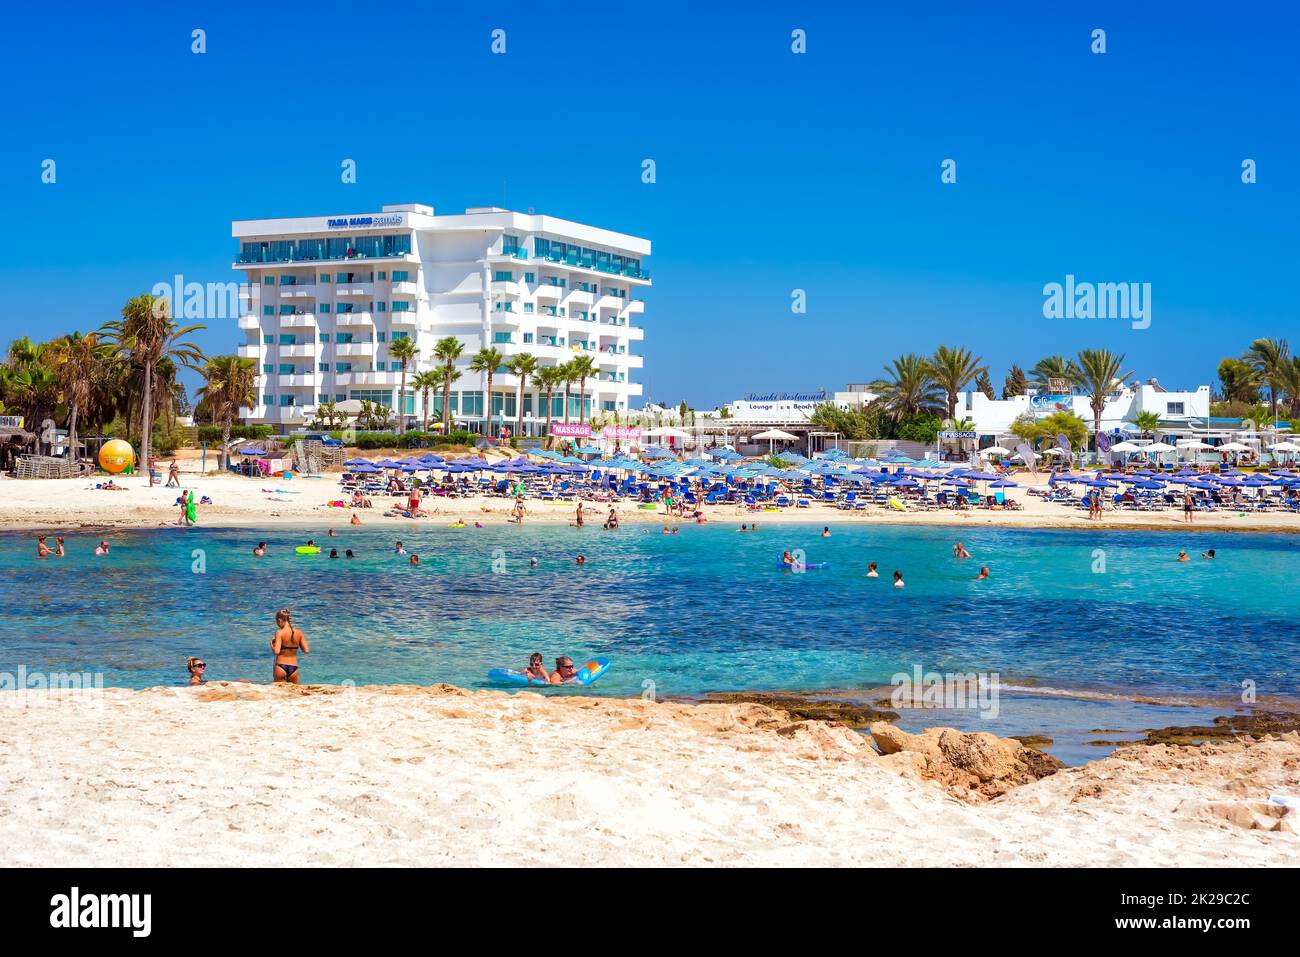 AYIA NAPA, CYPRUS - AUGUST 18, 2016: People enjoying nice summer day in Vathia Gonia (Sandy bay) Beach Stock Photo